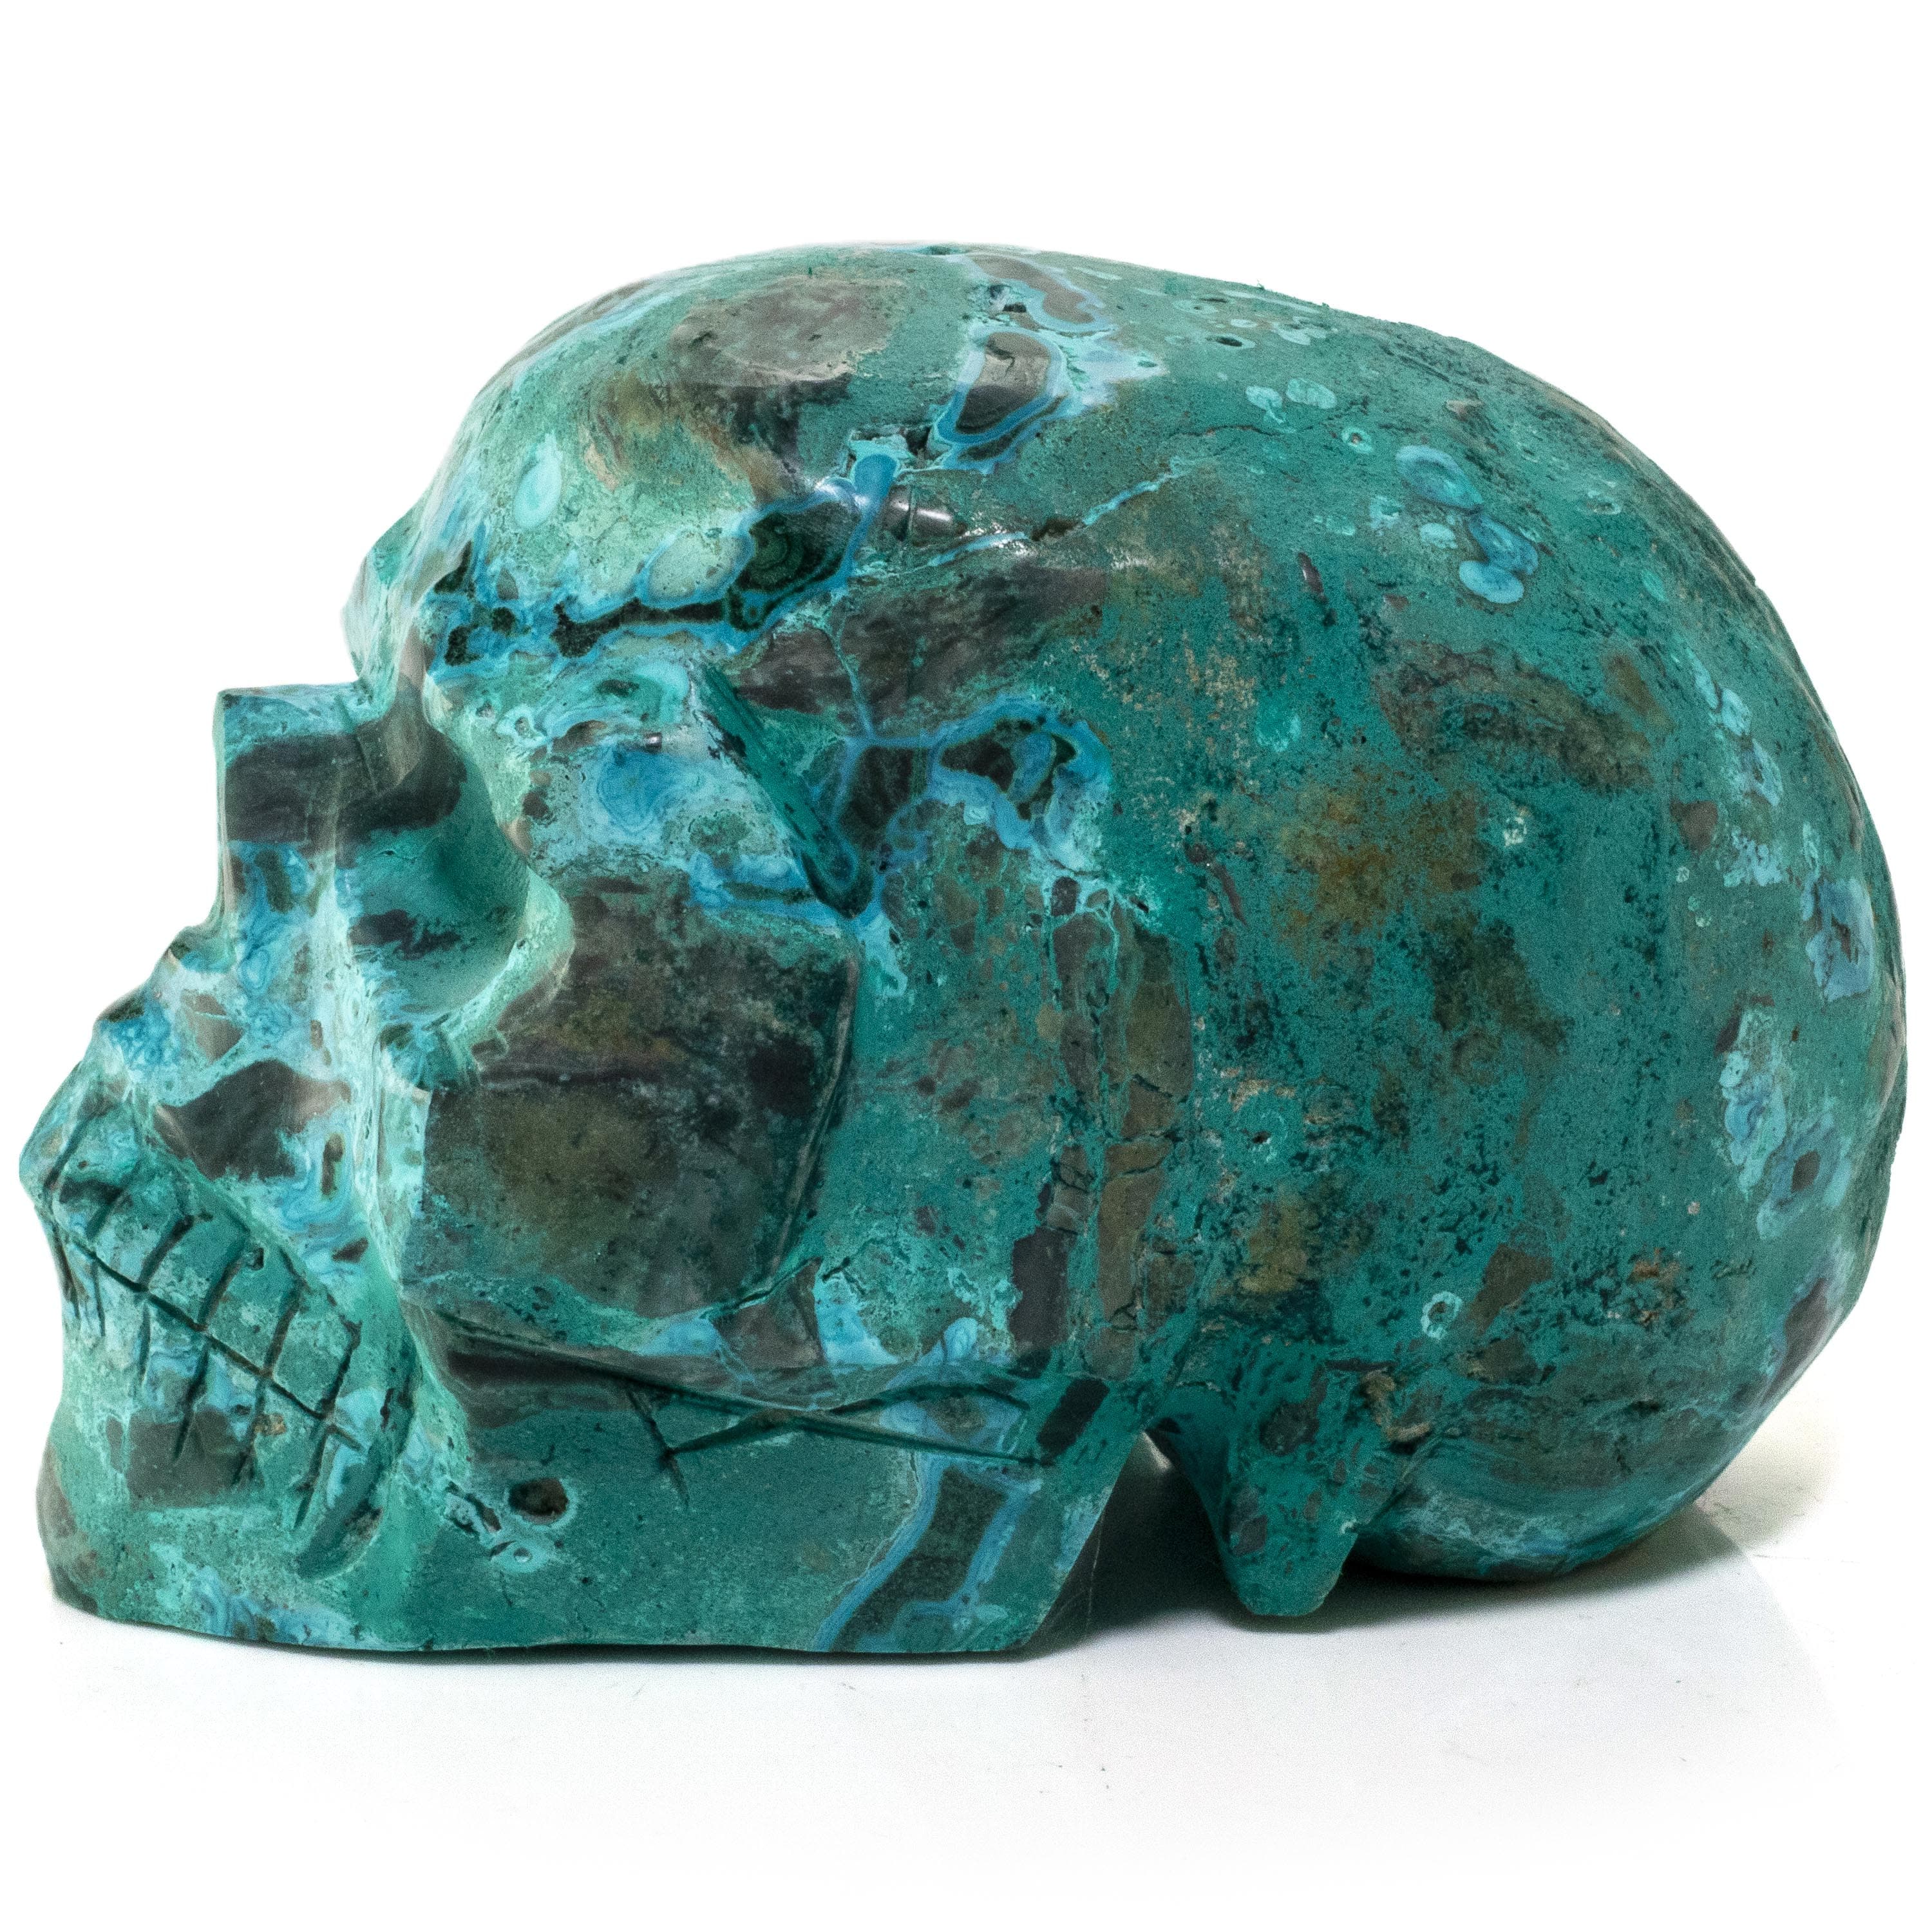 Kalifano Malachite Chrysocolla Skull Carving 5" / 1,350g SK4800-CRY.001